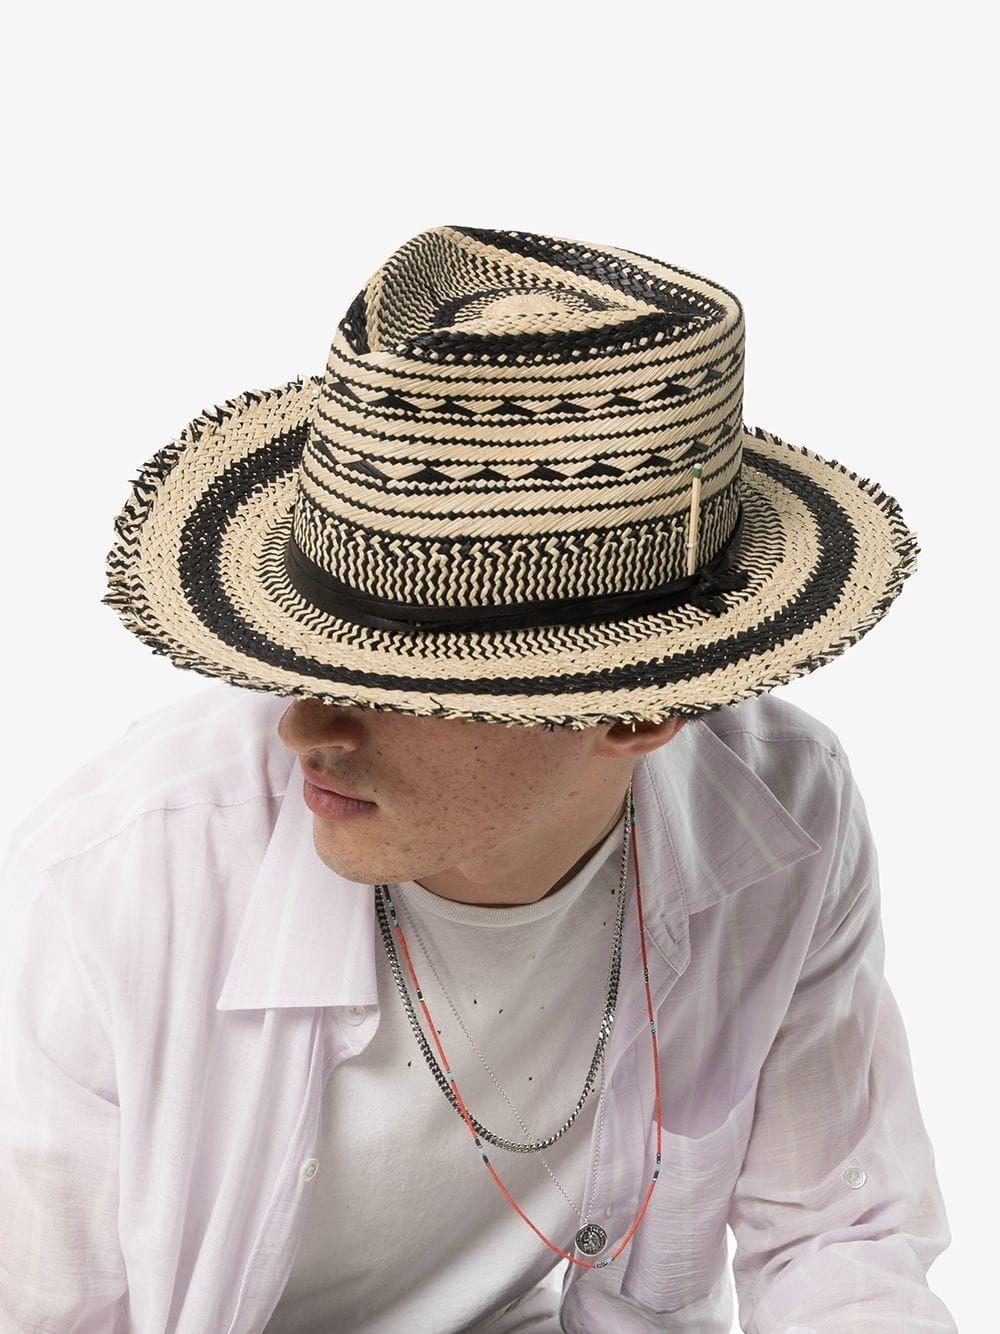 Nick Fouquet Vagues Negra Straw Hat for Men - Lyst